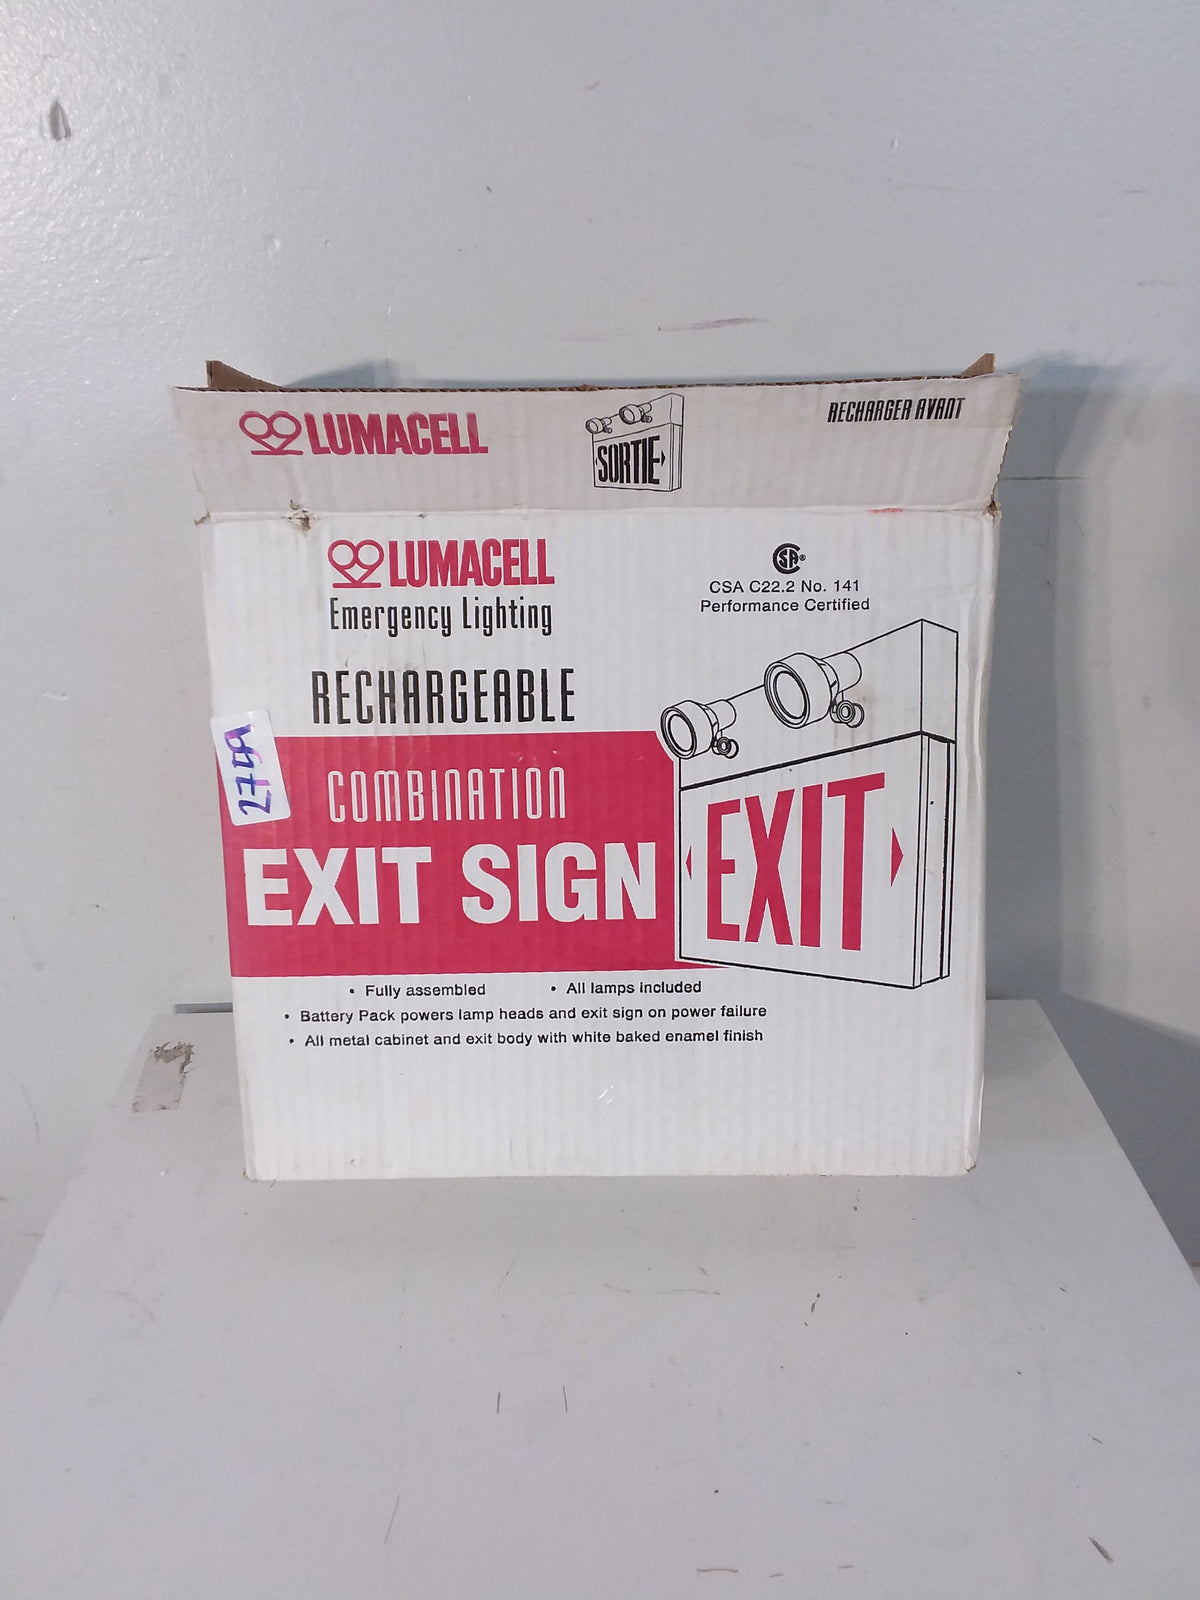 Rechargable Combination Exit Sign